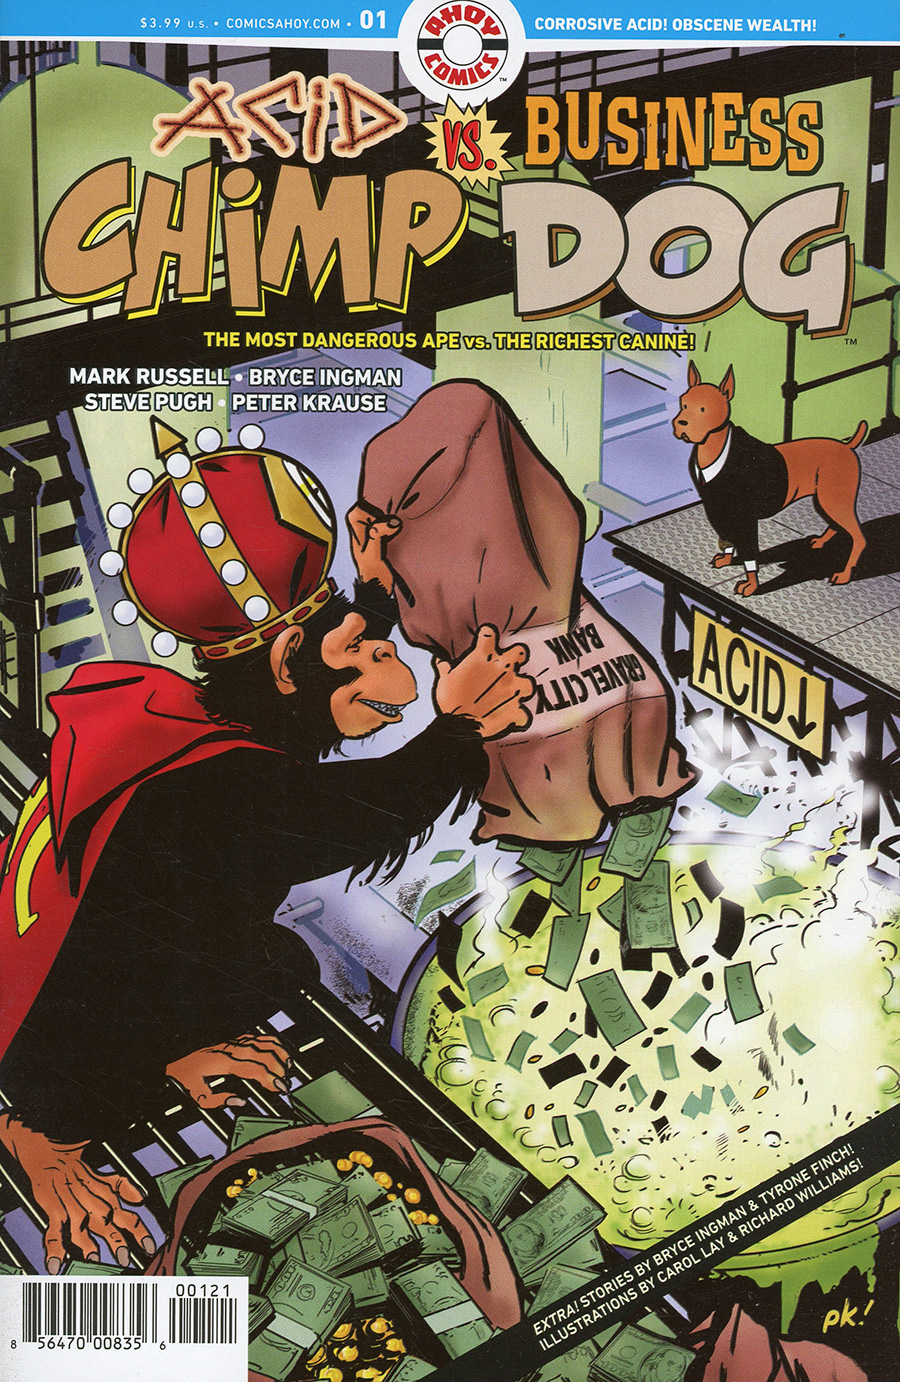 Acid Chimp vs Business Dog #1 (One Shot) Cover B Variant Peter Krause Cover